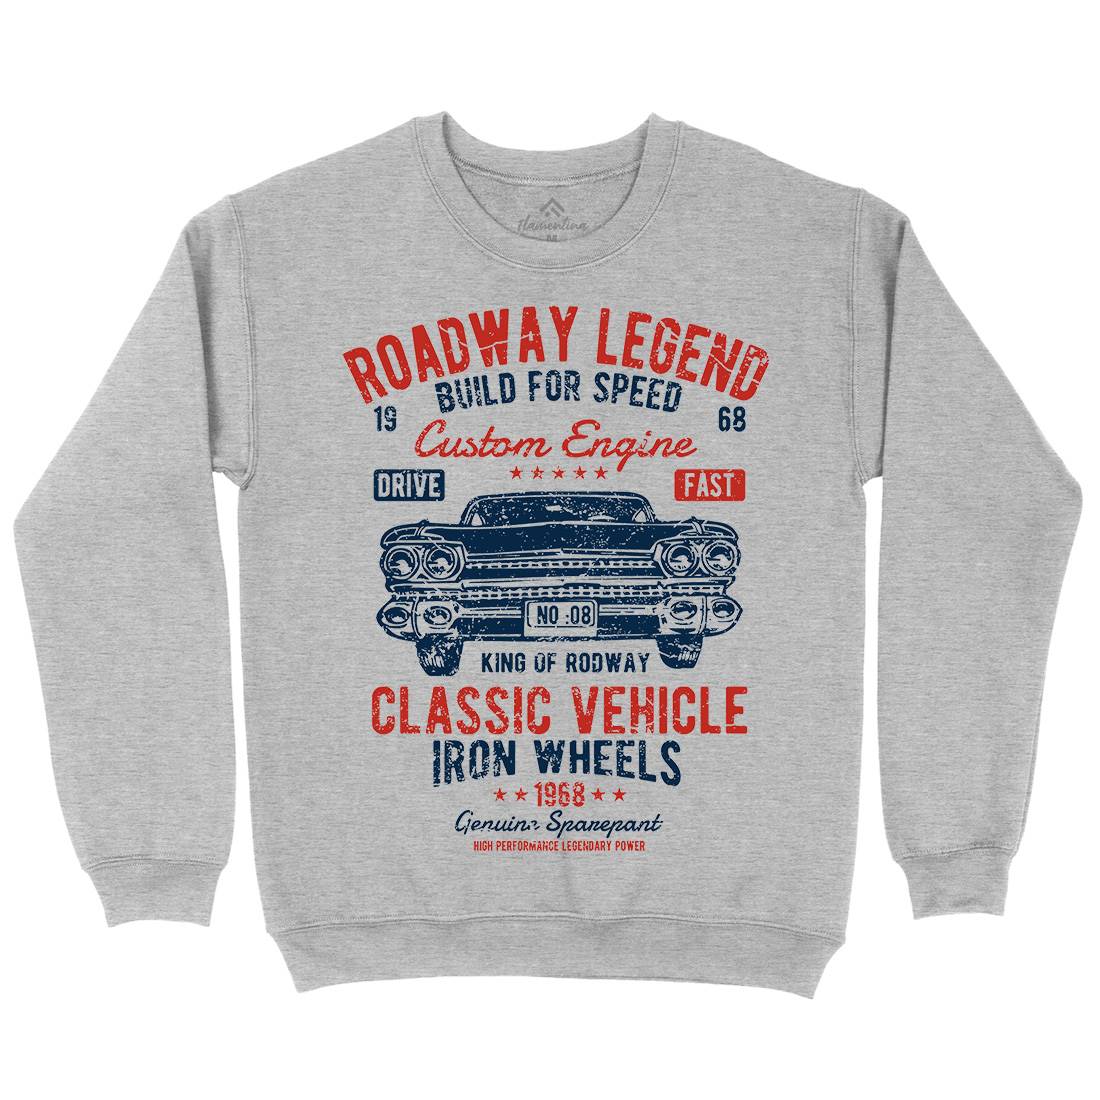 Roadway Legend Kids Crew Neck Sweatshirt Cars A125